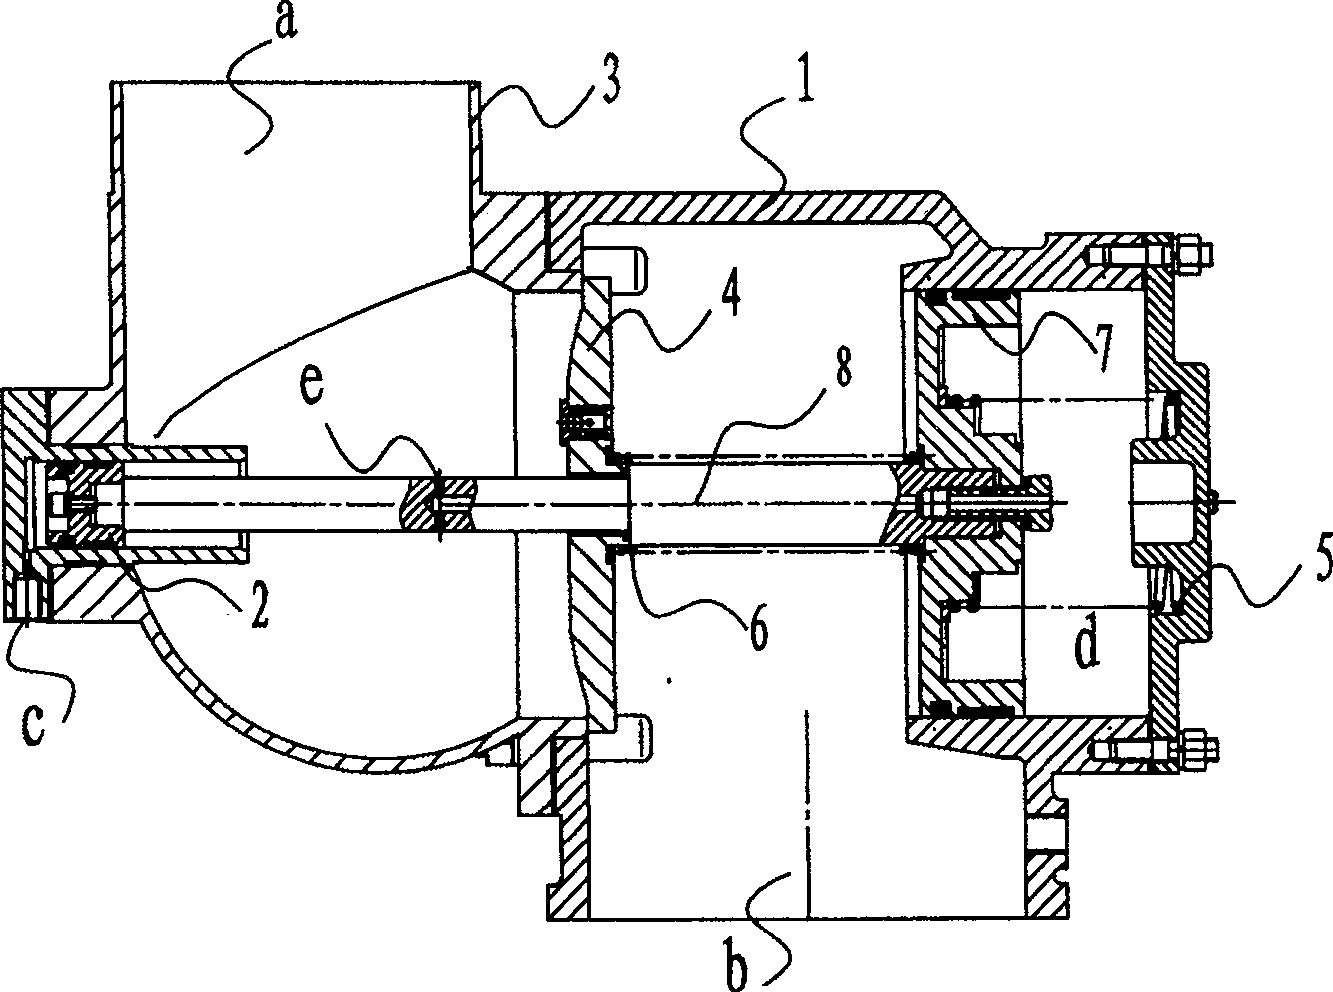 Gas compressor load discharging valve